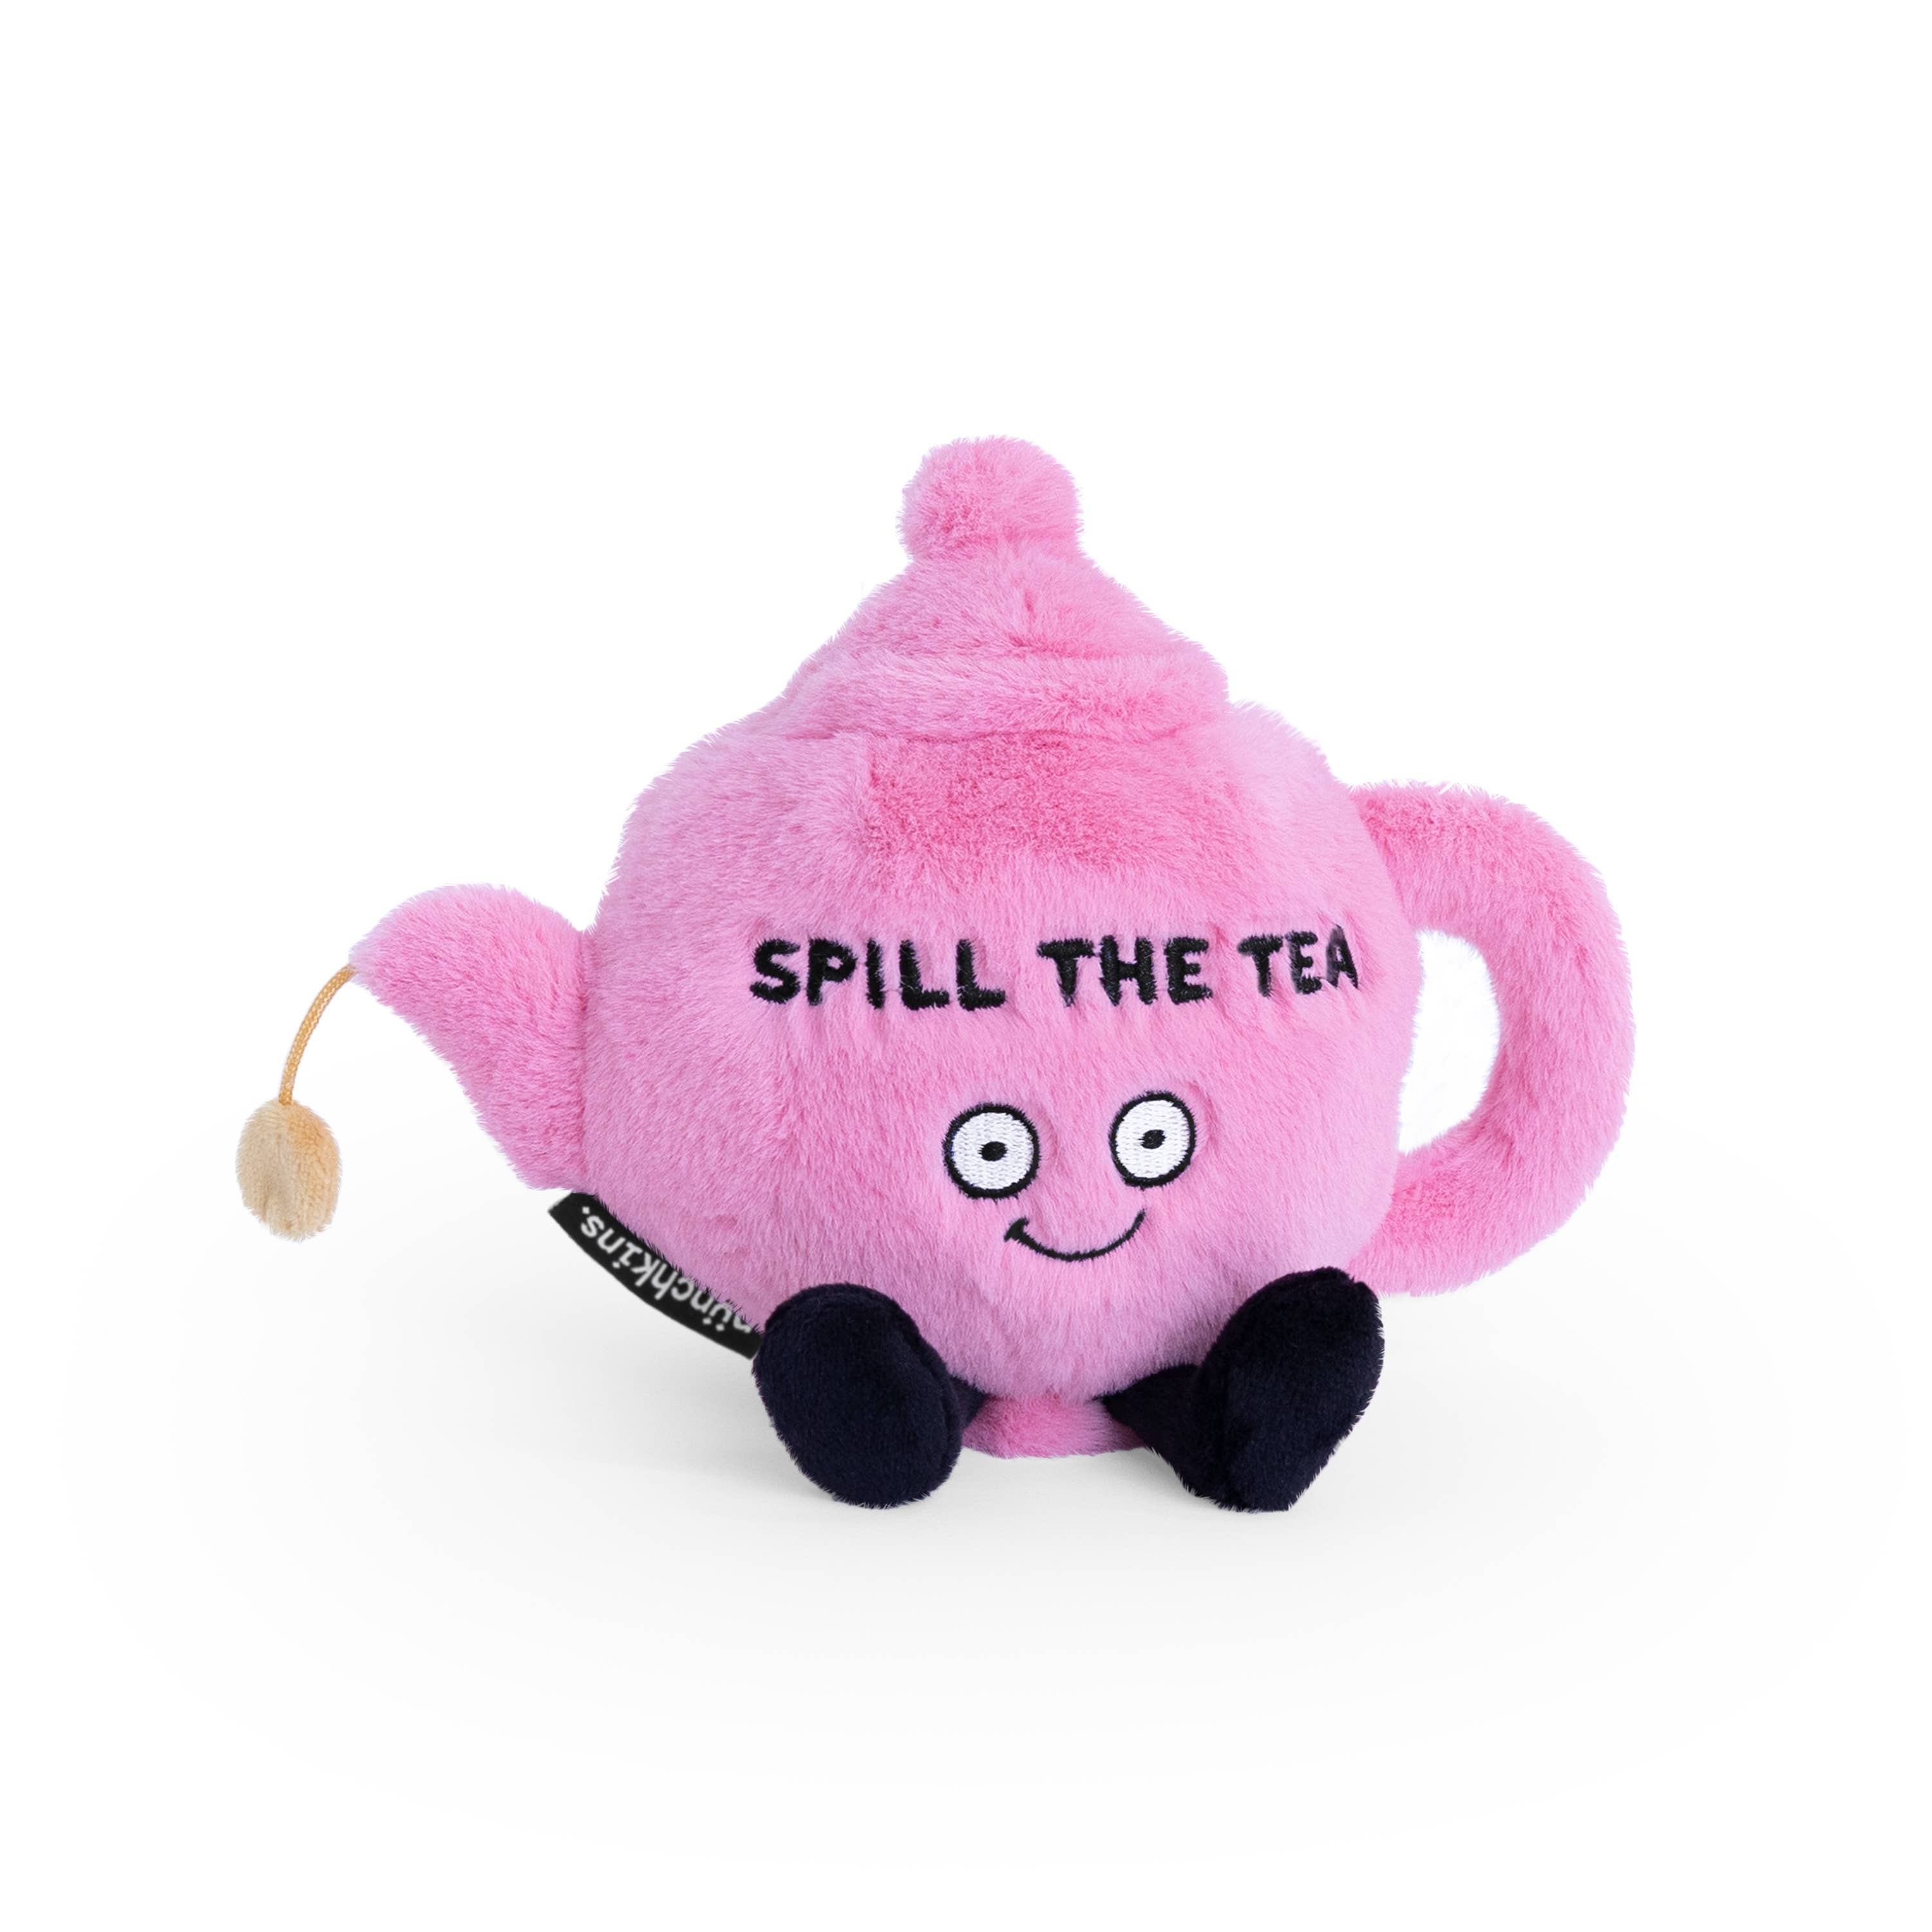 Punchkins "Spill the Tea" Plush Teapot Kawaii Gifts